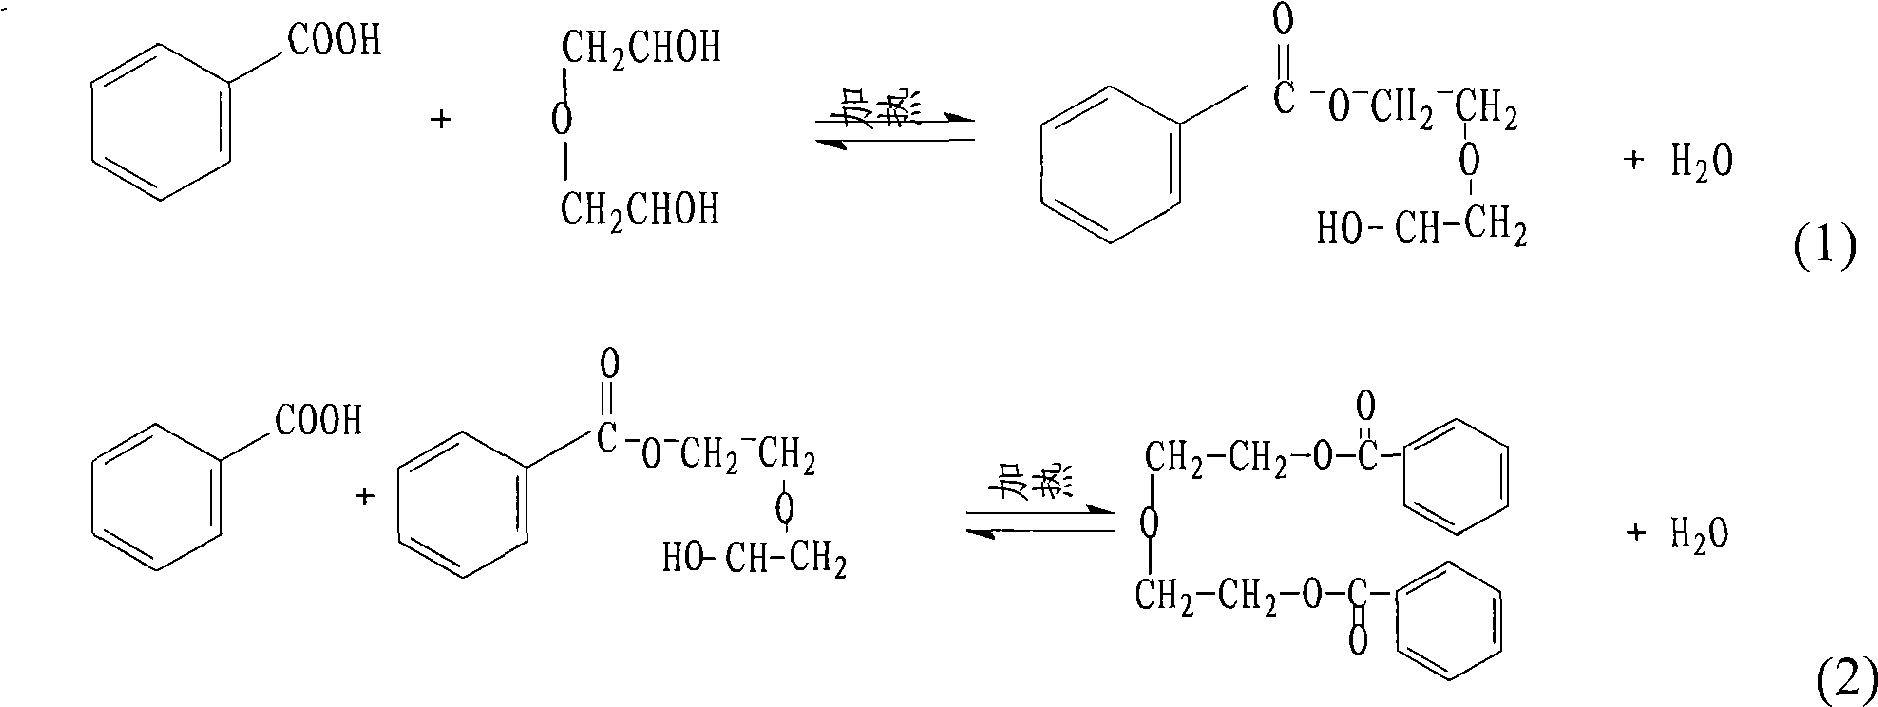 Method for producing elasticizer diethylene glycol dibenzoate